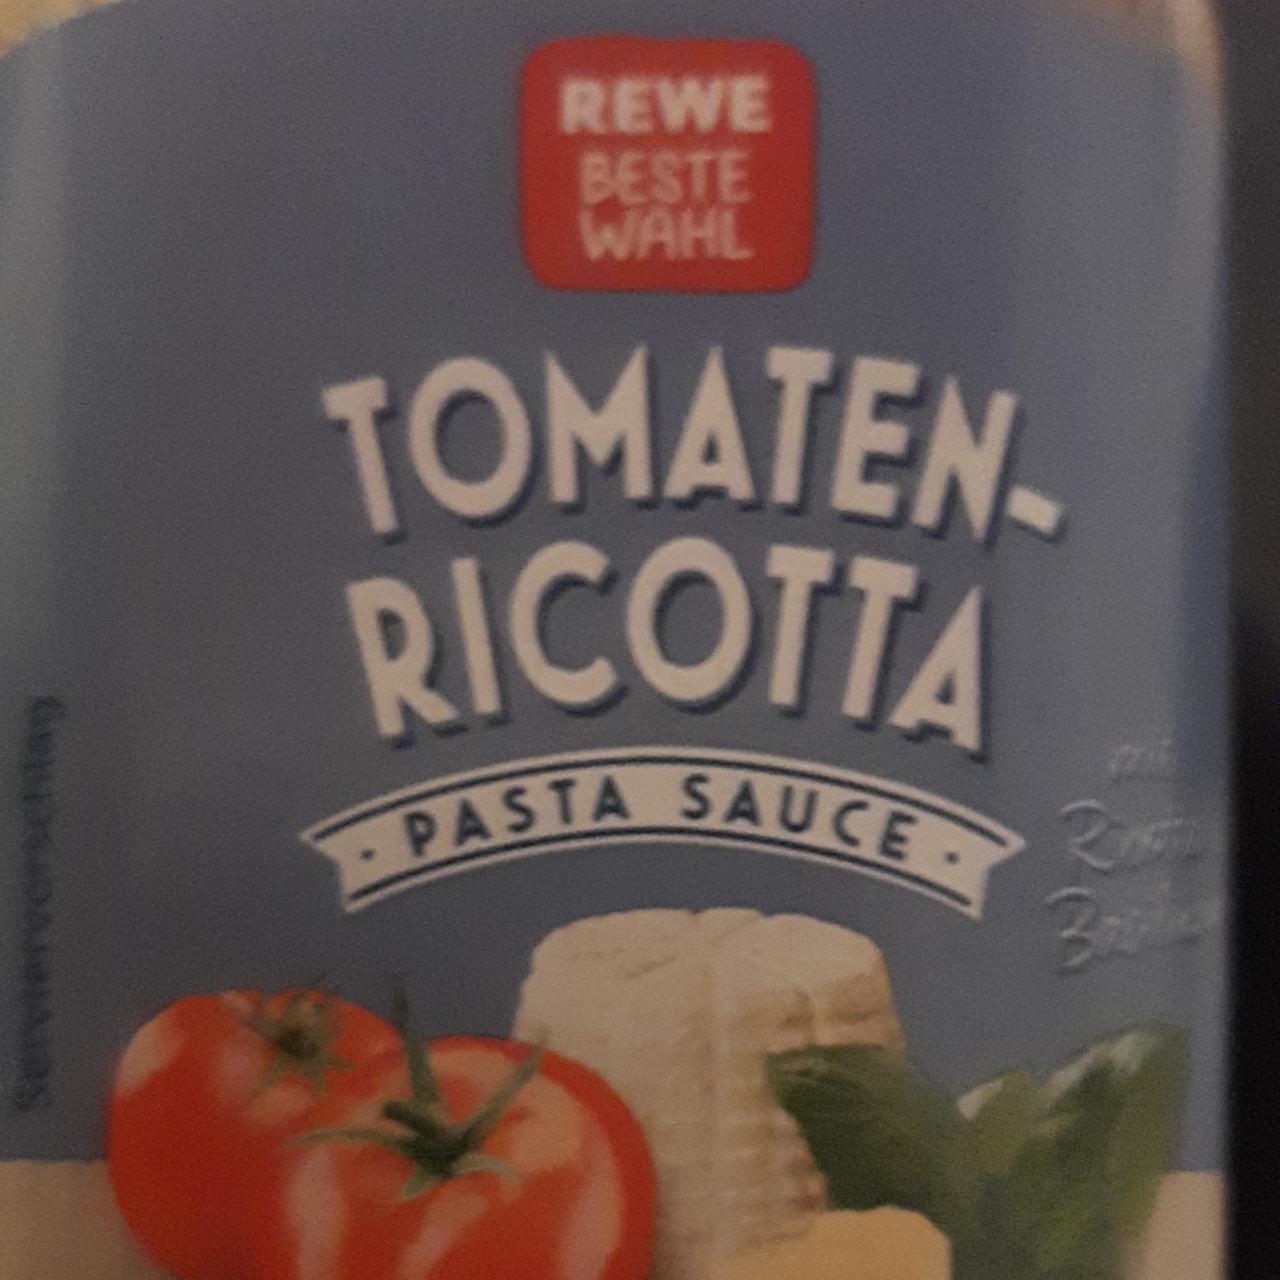 Fotografie - Tomaten ricotta pasta sauce Rewe beste wahl